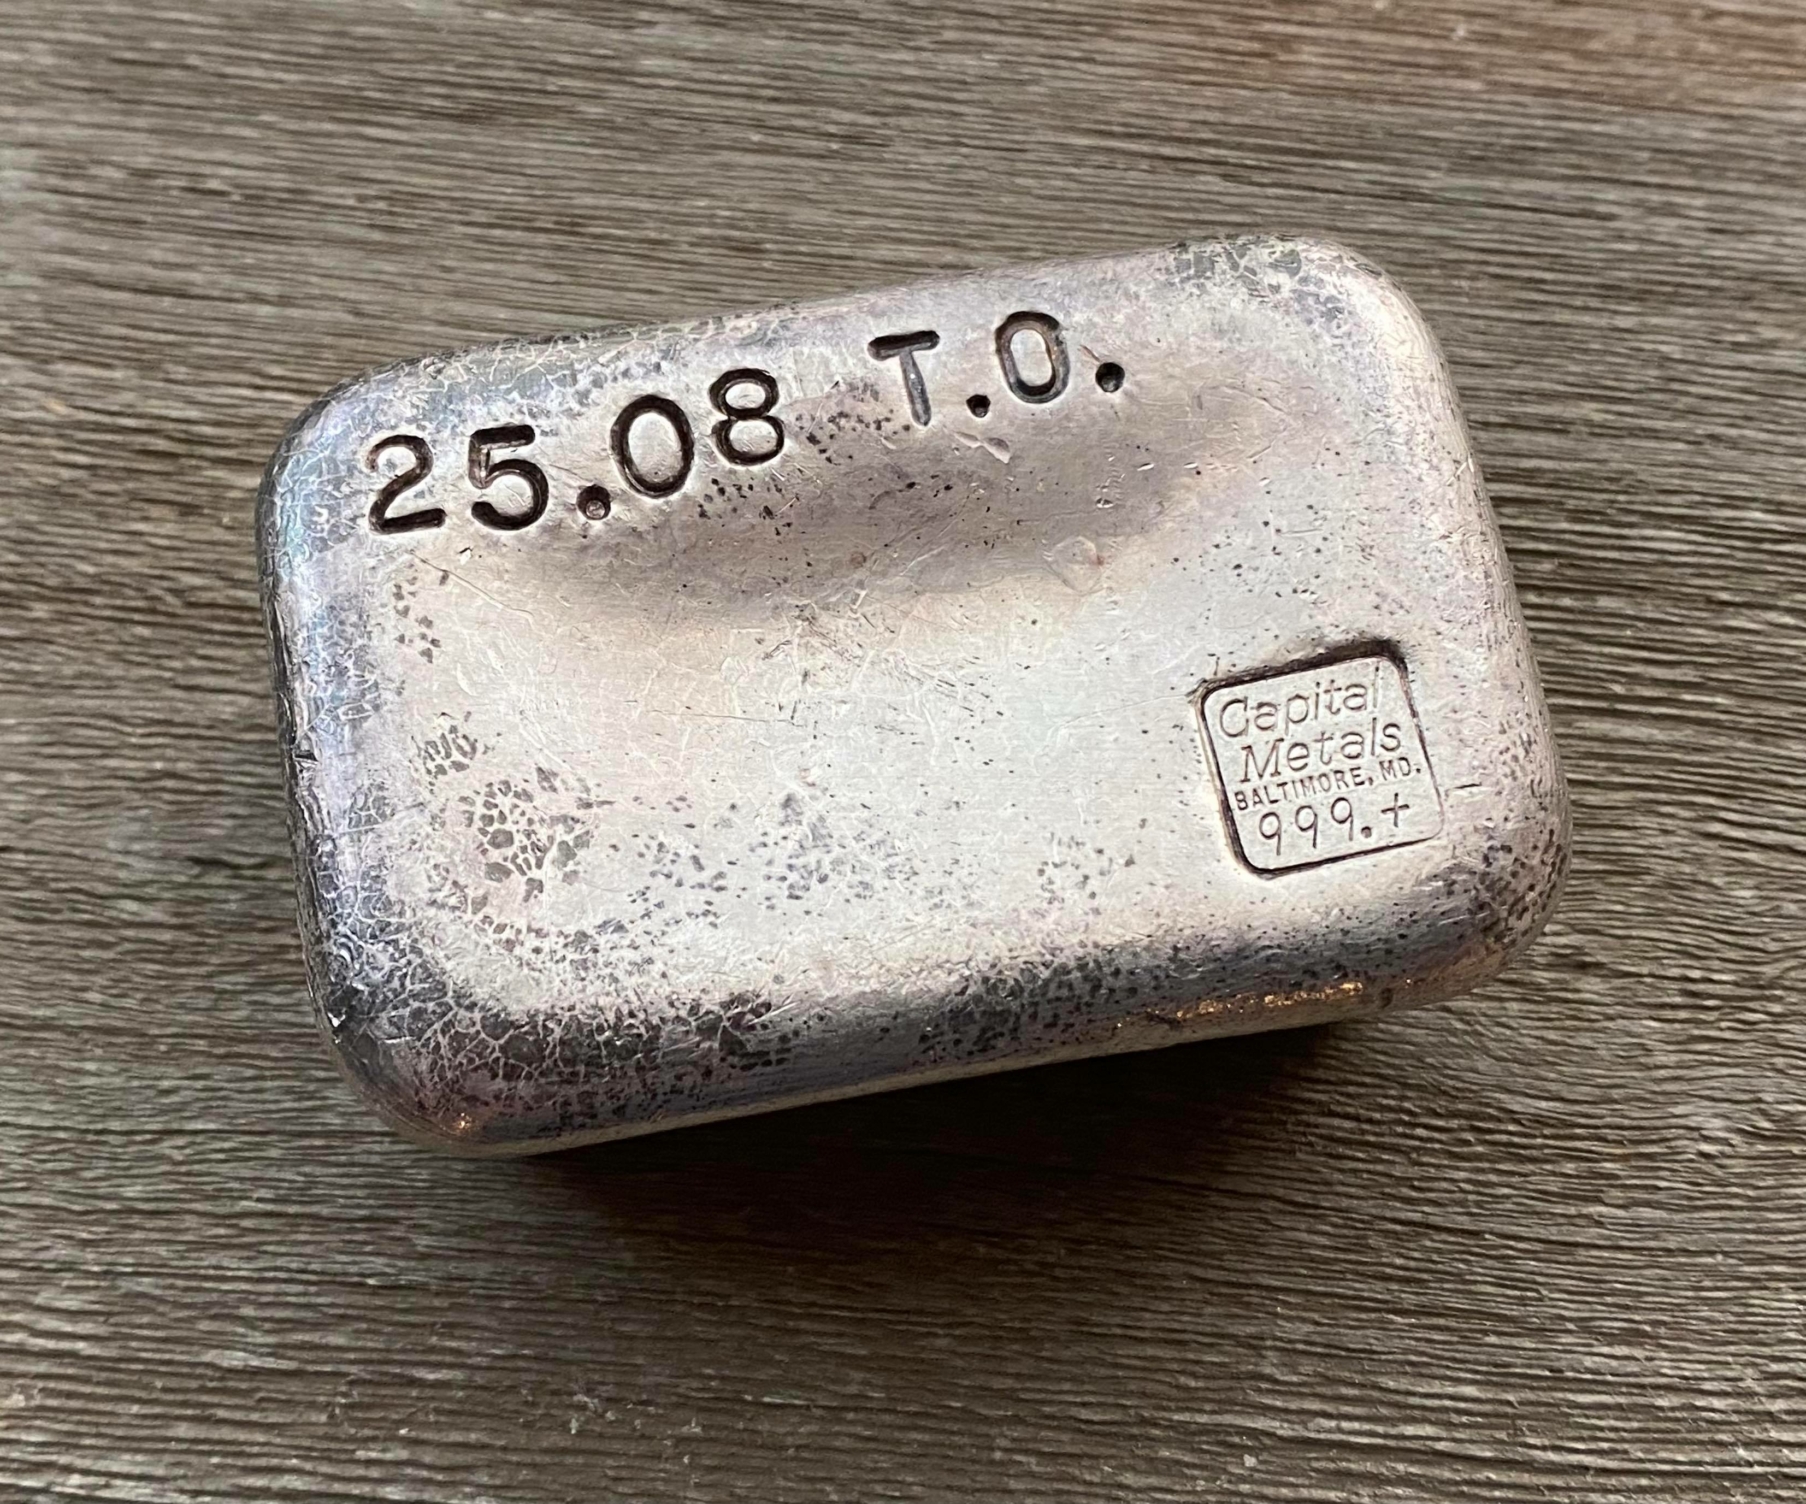 Capital Metals 25.08 vintage silver bar